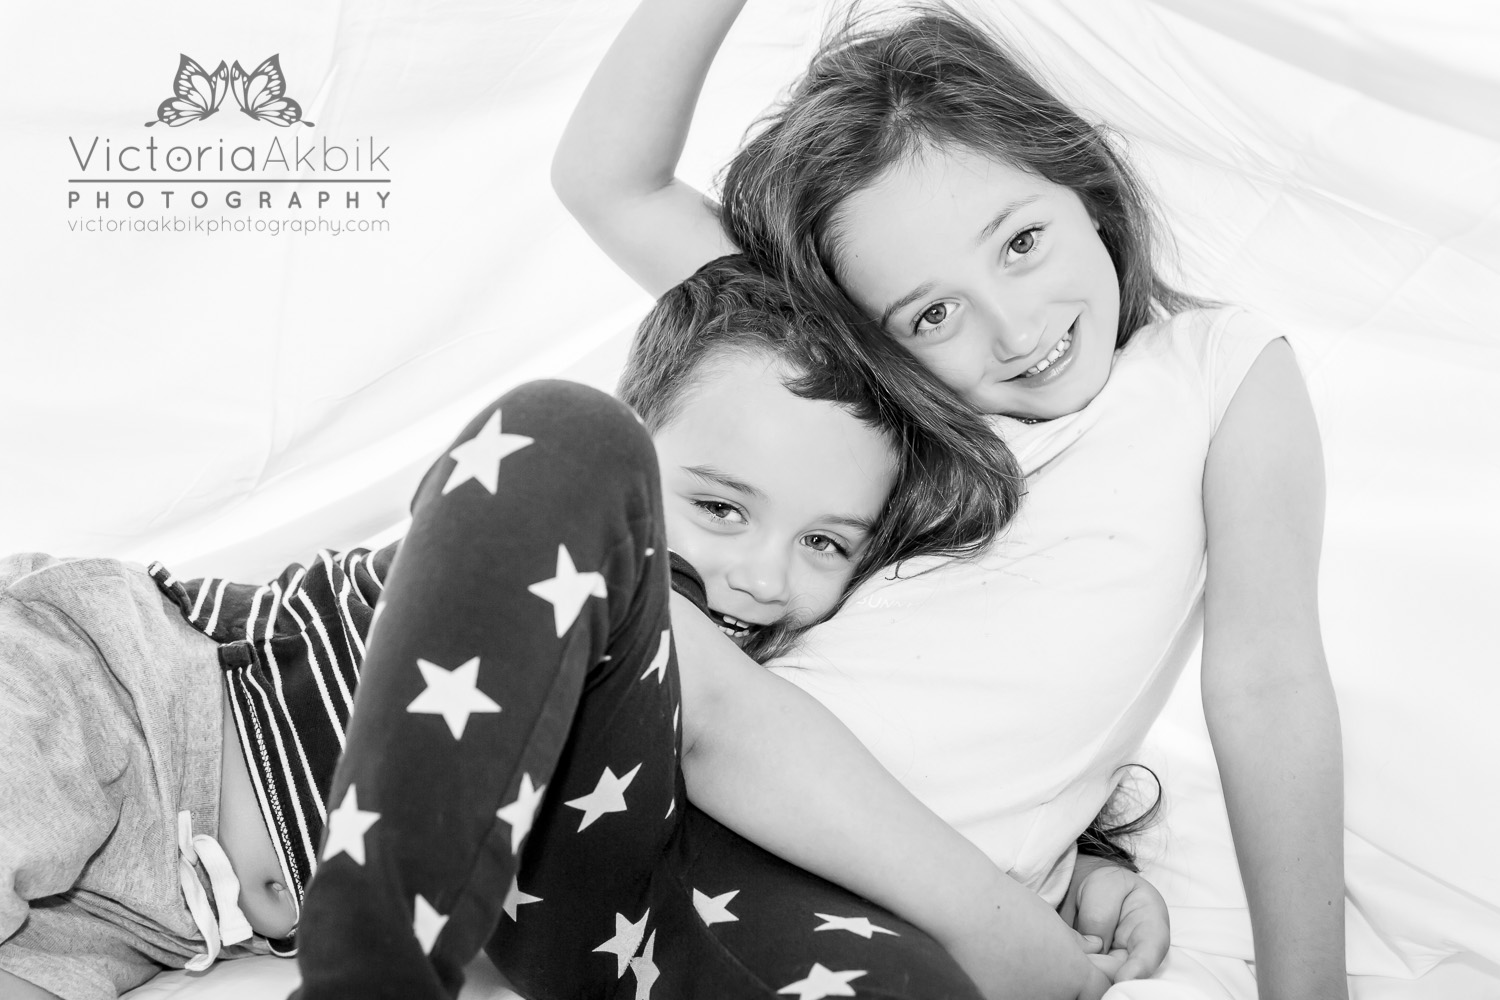 Home Photo Session | Abu Dhabi Lifestyle Family Photography » Victoria Akbik Photography